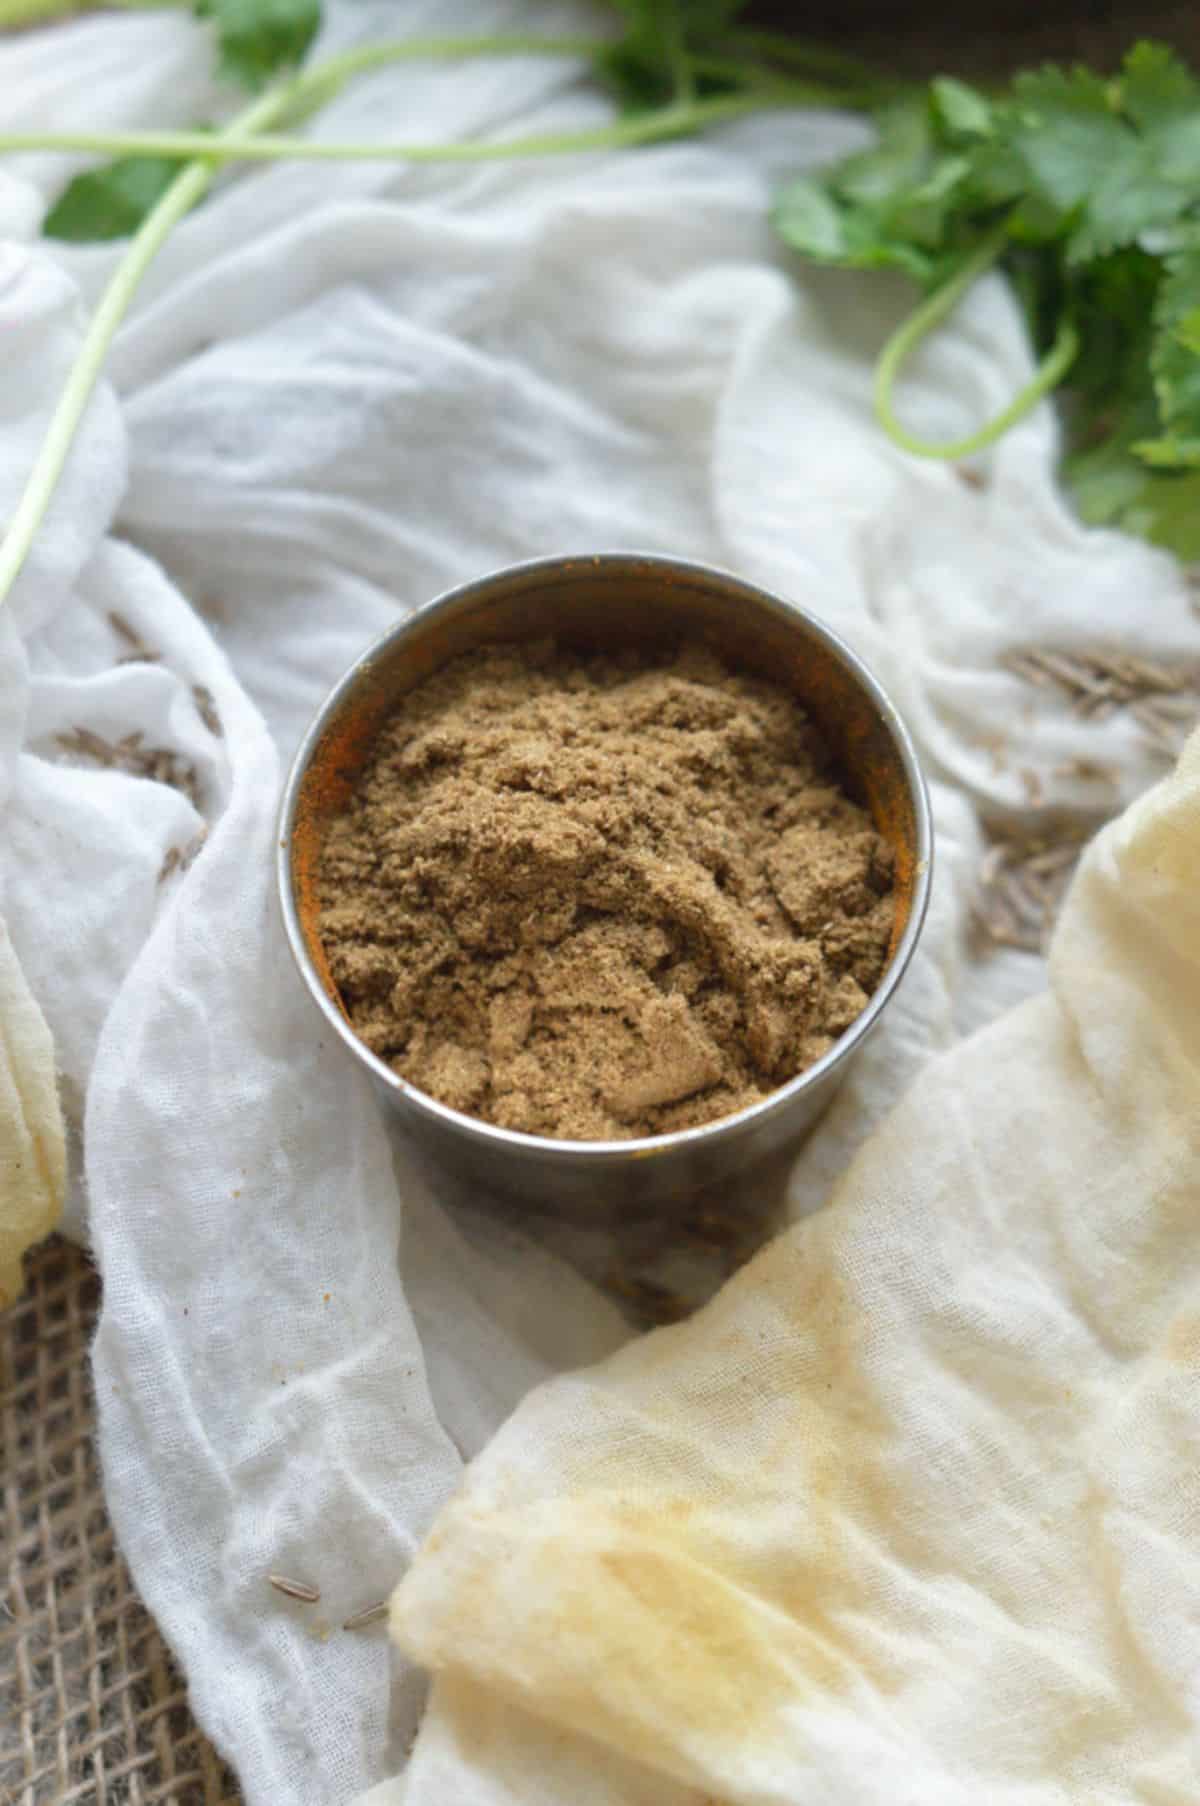 Cumin powder in a small bowl.